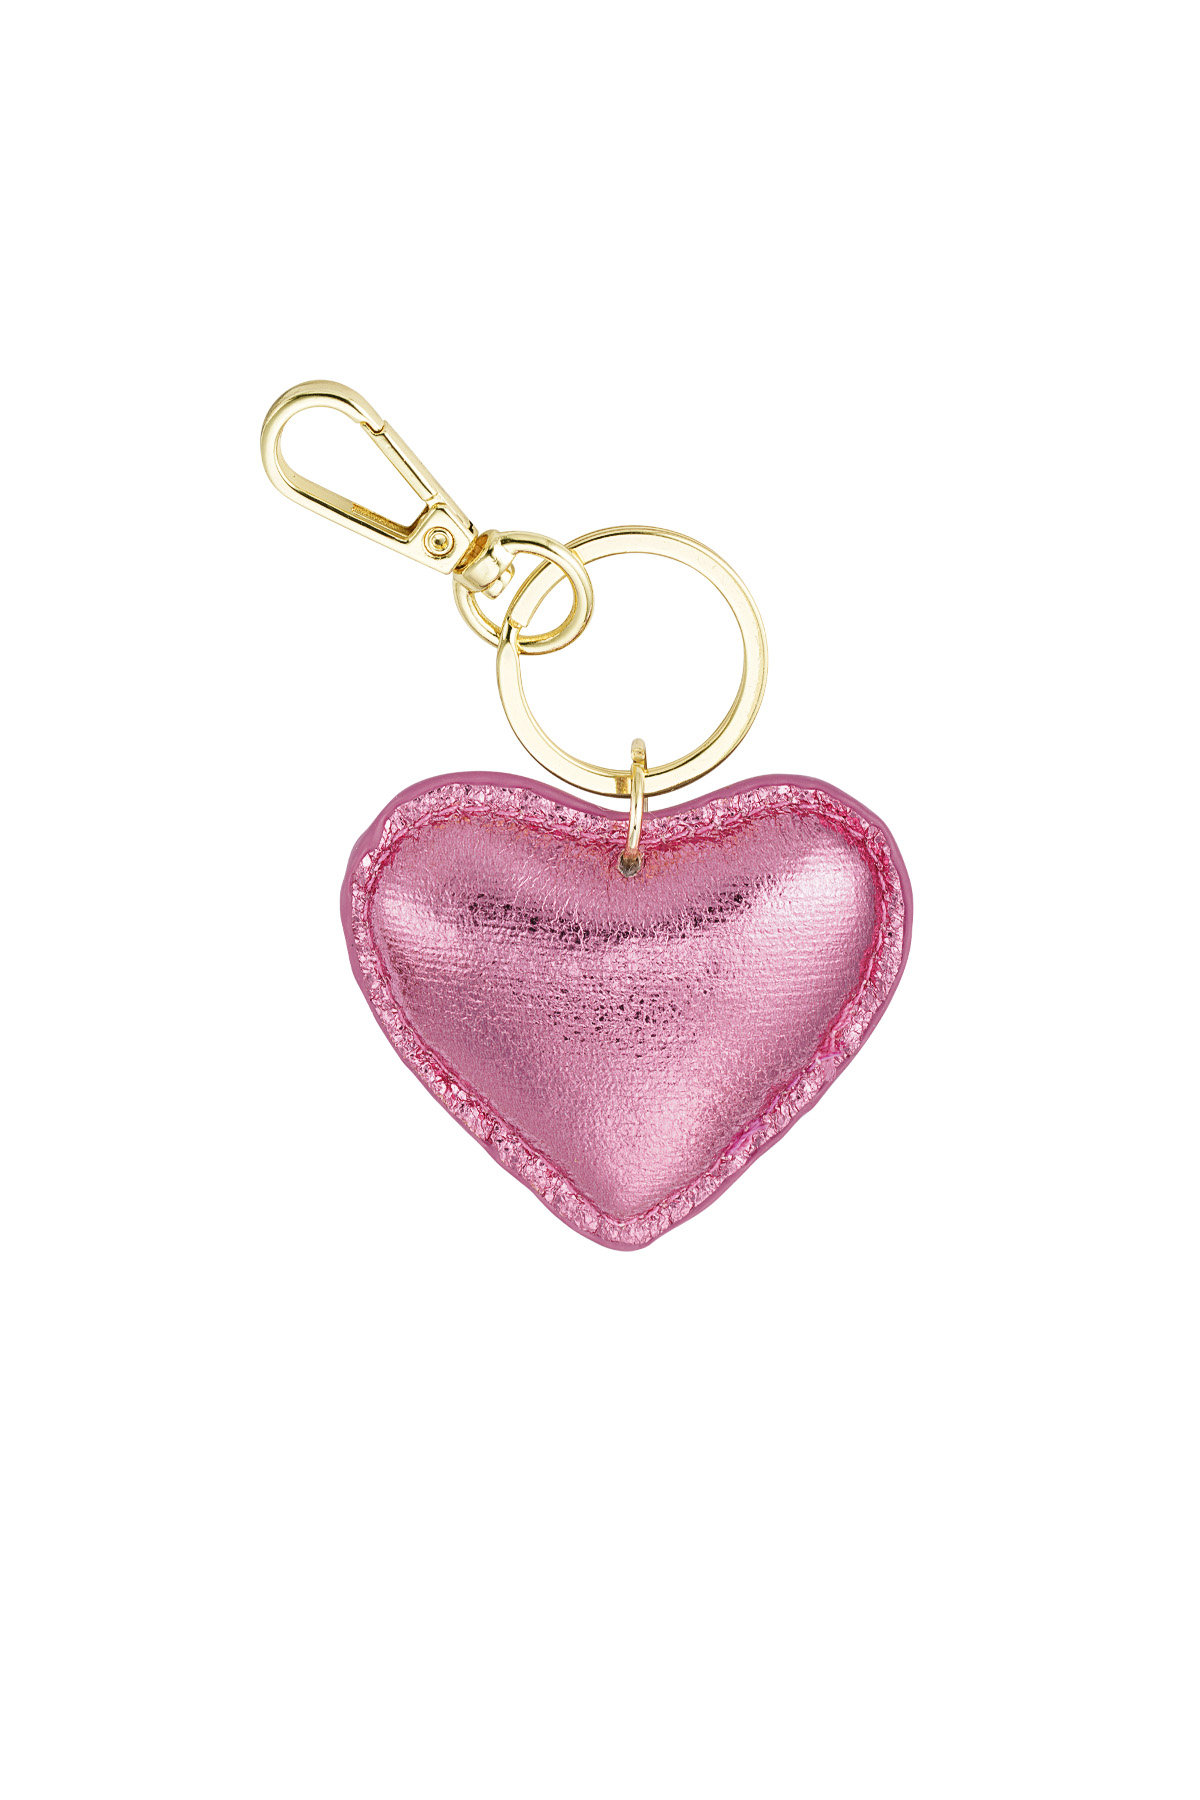 Keychain heart - light pink h5 